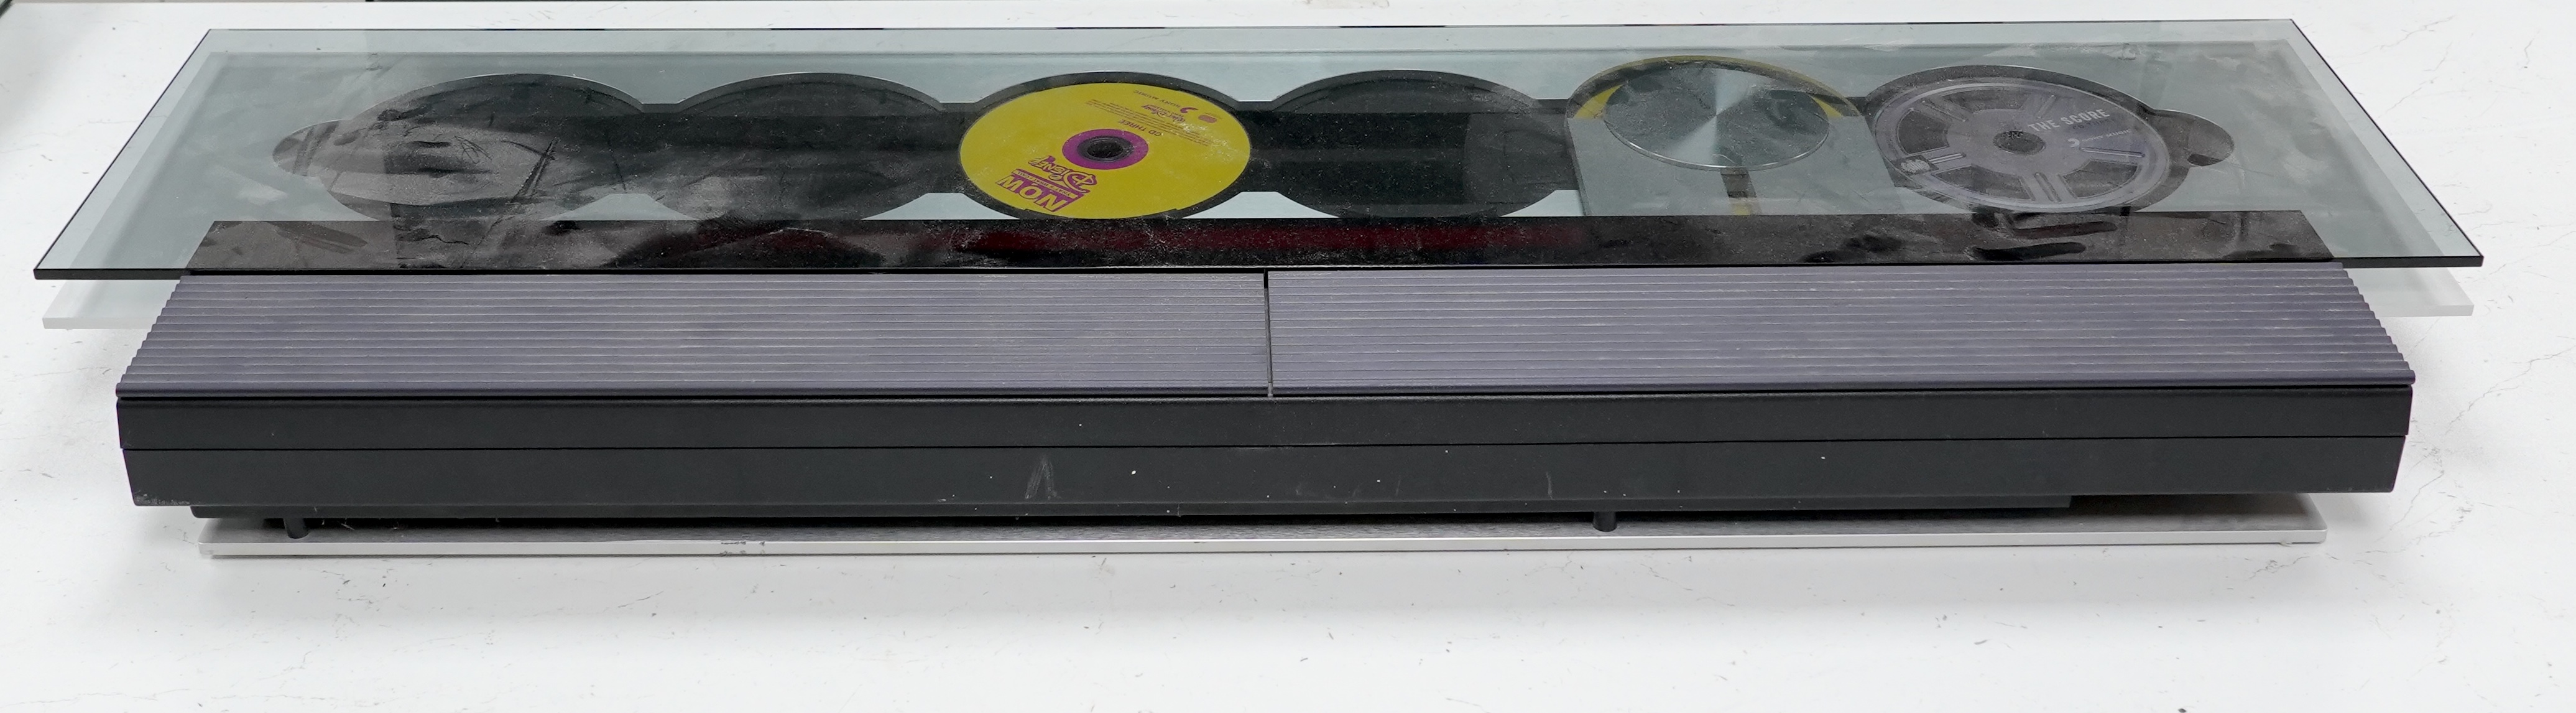 A Bang & Olufsen Beosound 9000 CD player, 90cm high